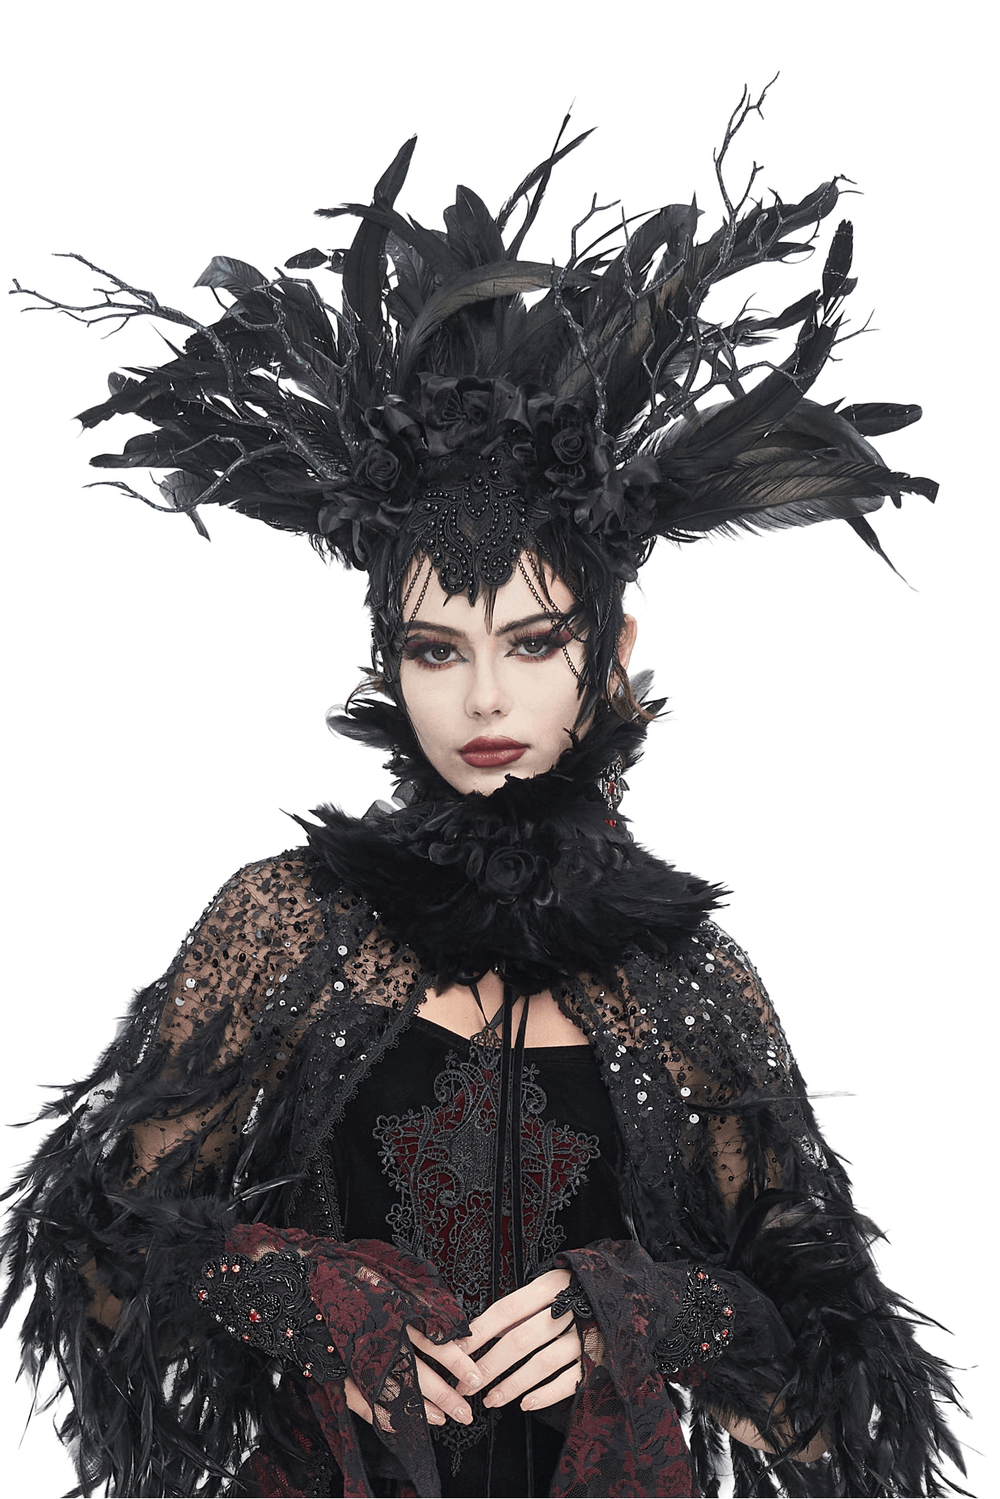 Corona de plumas gótica negra con detalles florales